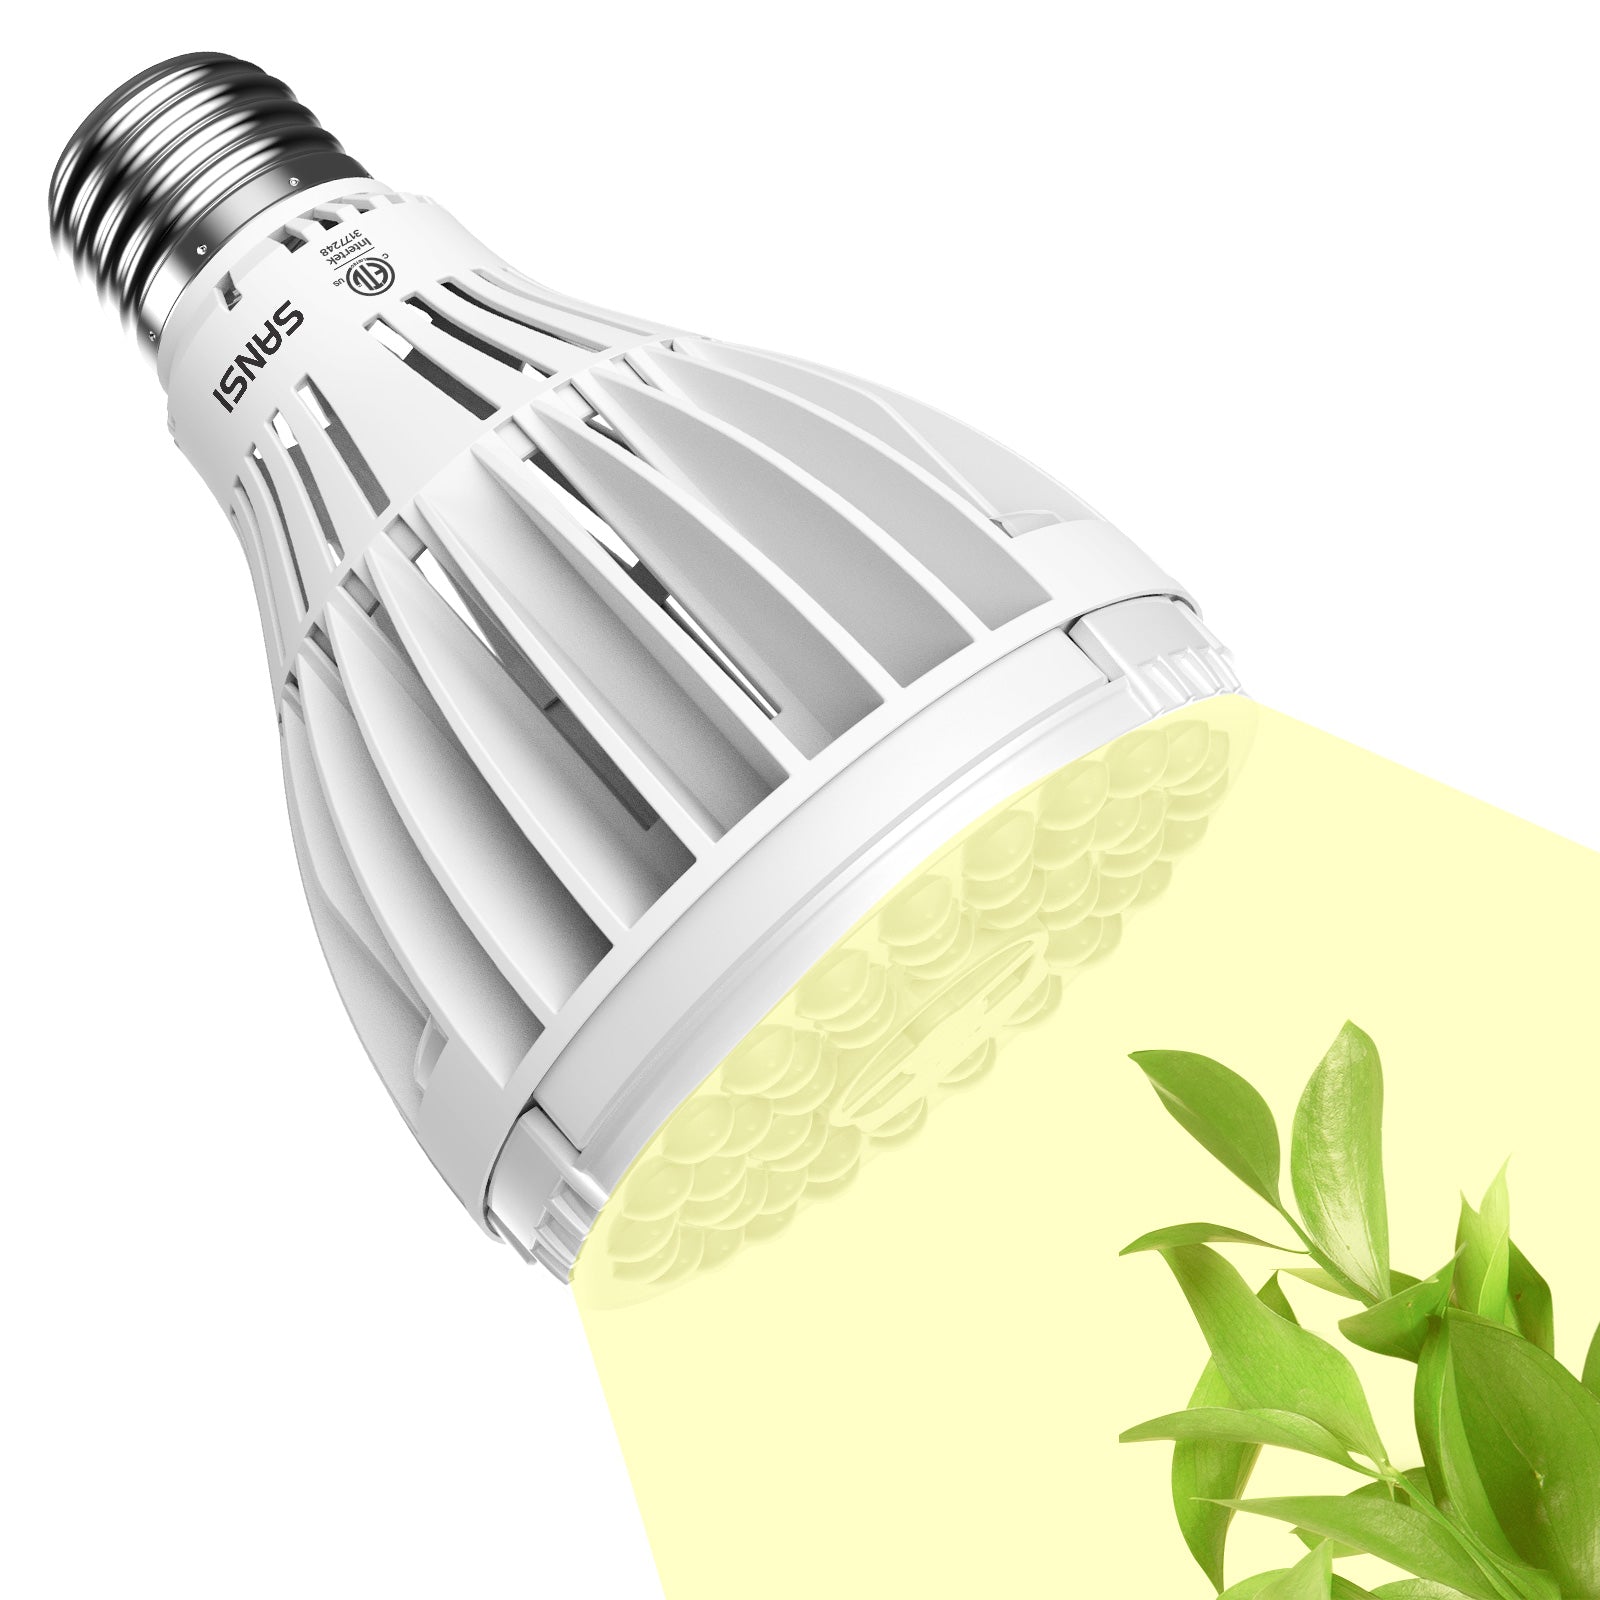 PAR25 24W LED Grow Light Bulb for Seeds and Greens